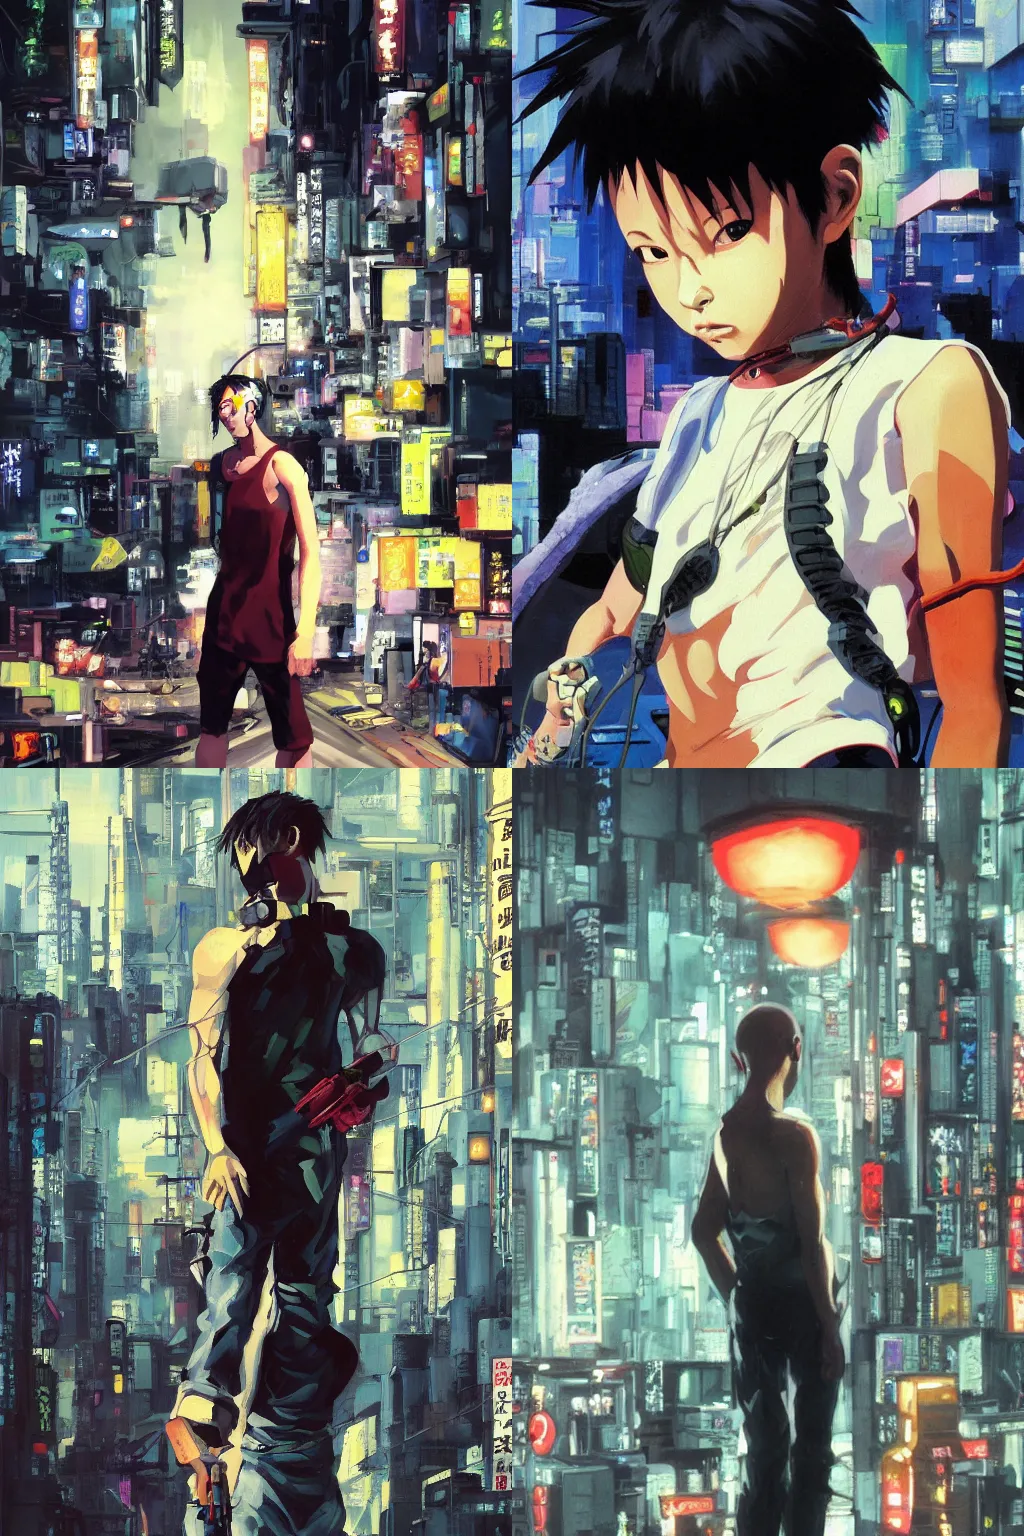 Prompt: oil painting, yoji shinakawa, studio gainax, bald black teenager wearing a white tank-top, cyberpunk city, ghost in the shell, badass